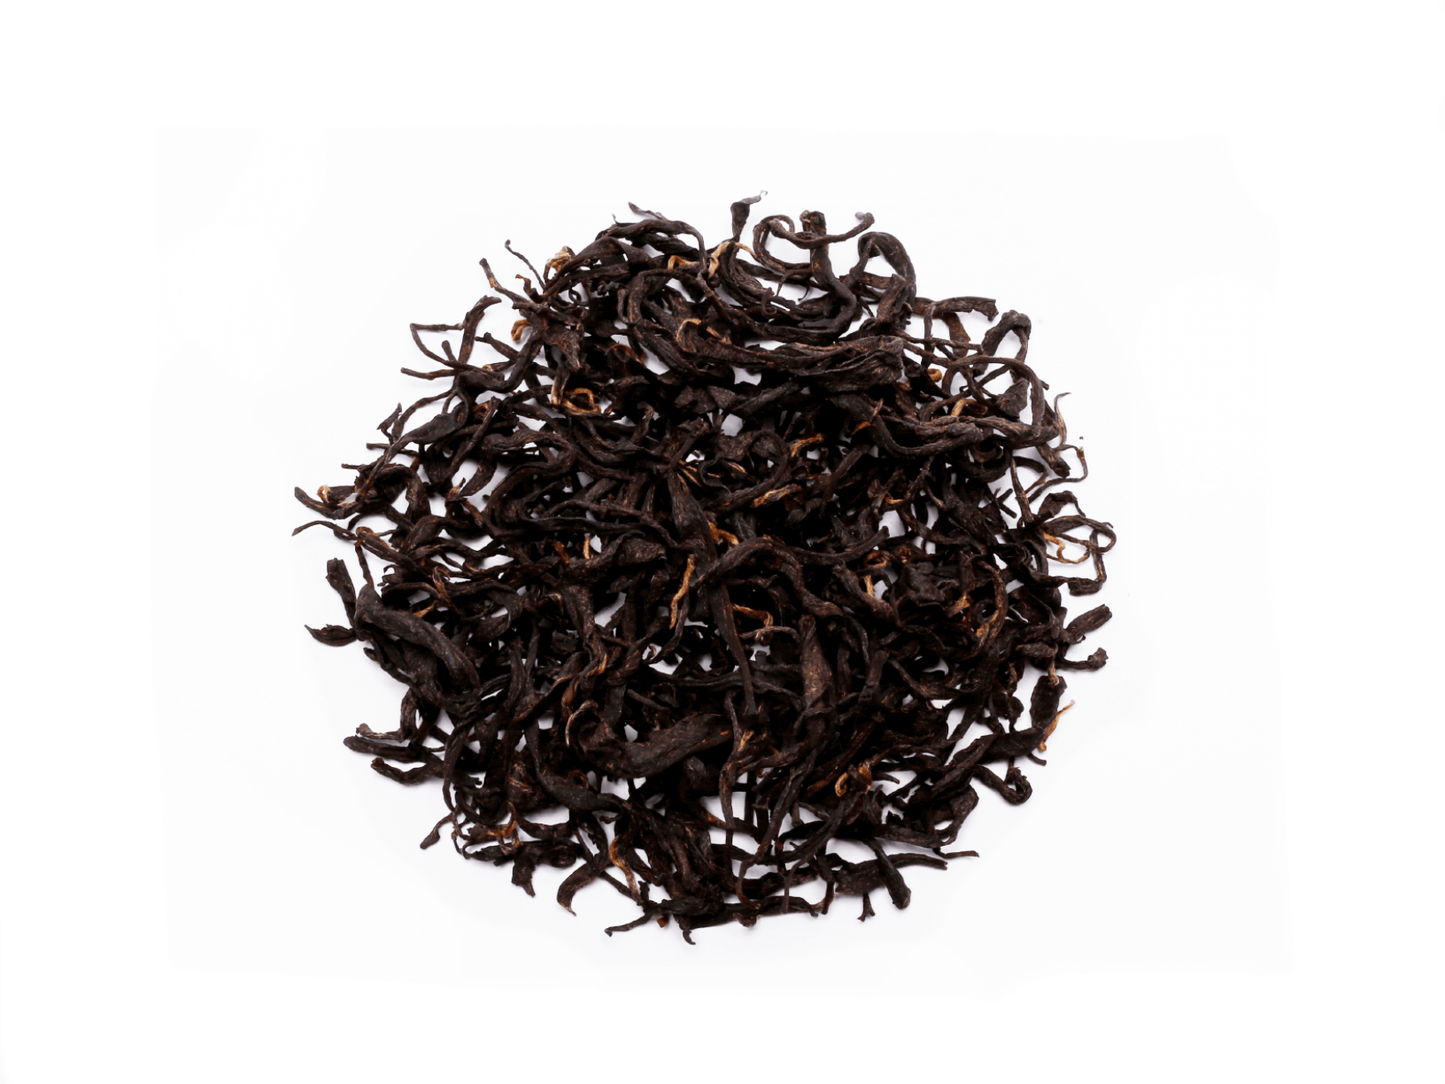 Burnished Beauty 150g - black tea